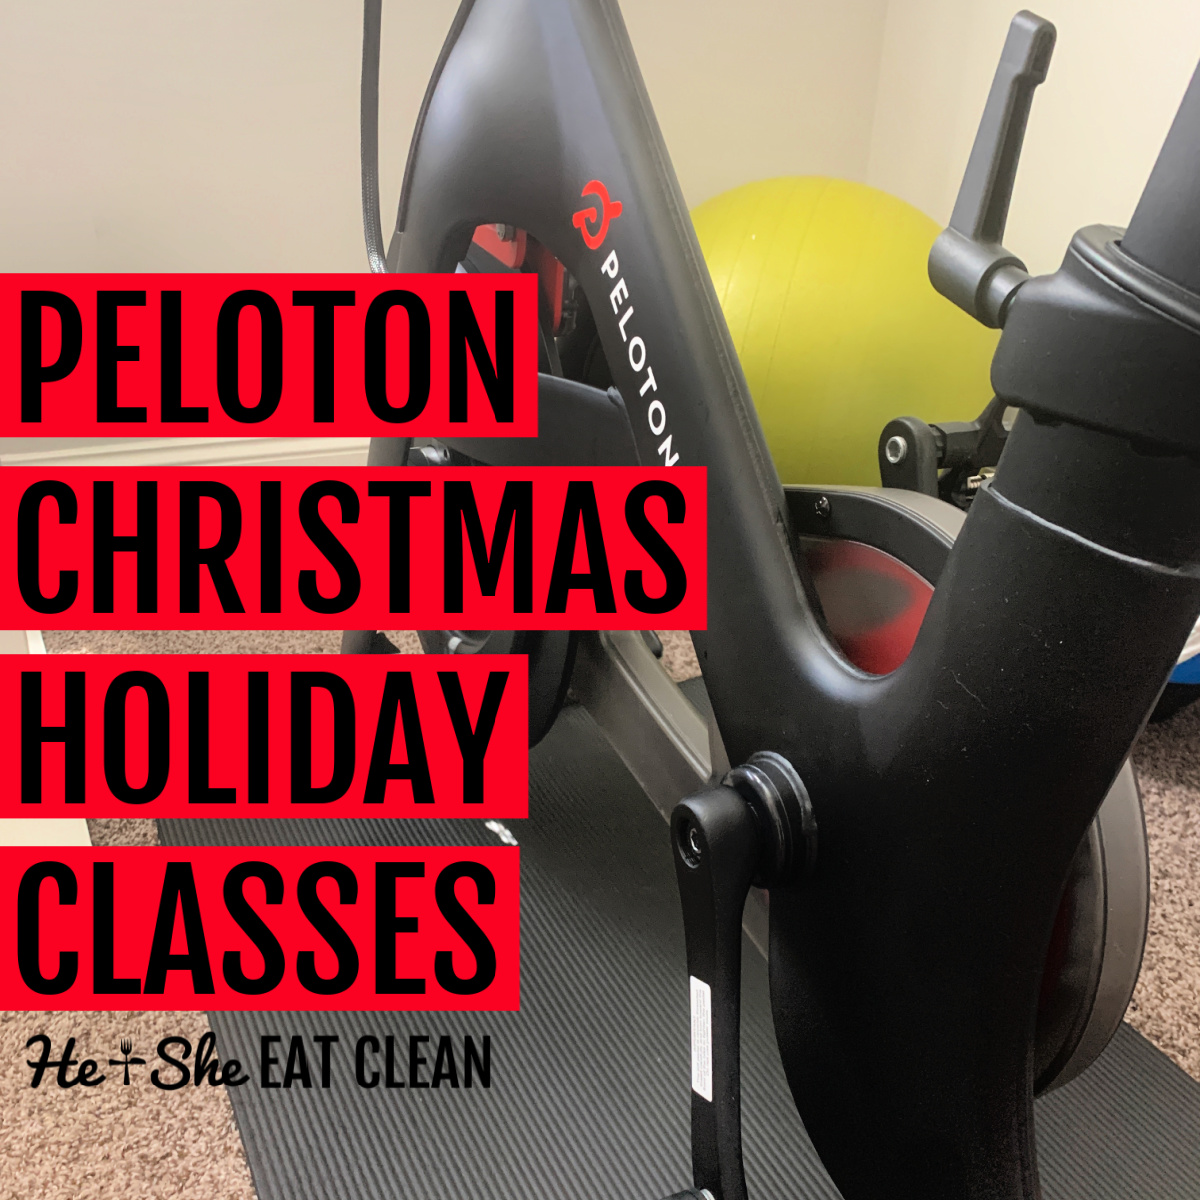 Peloton Christmas/Holiday Classes